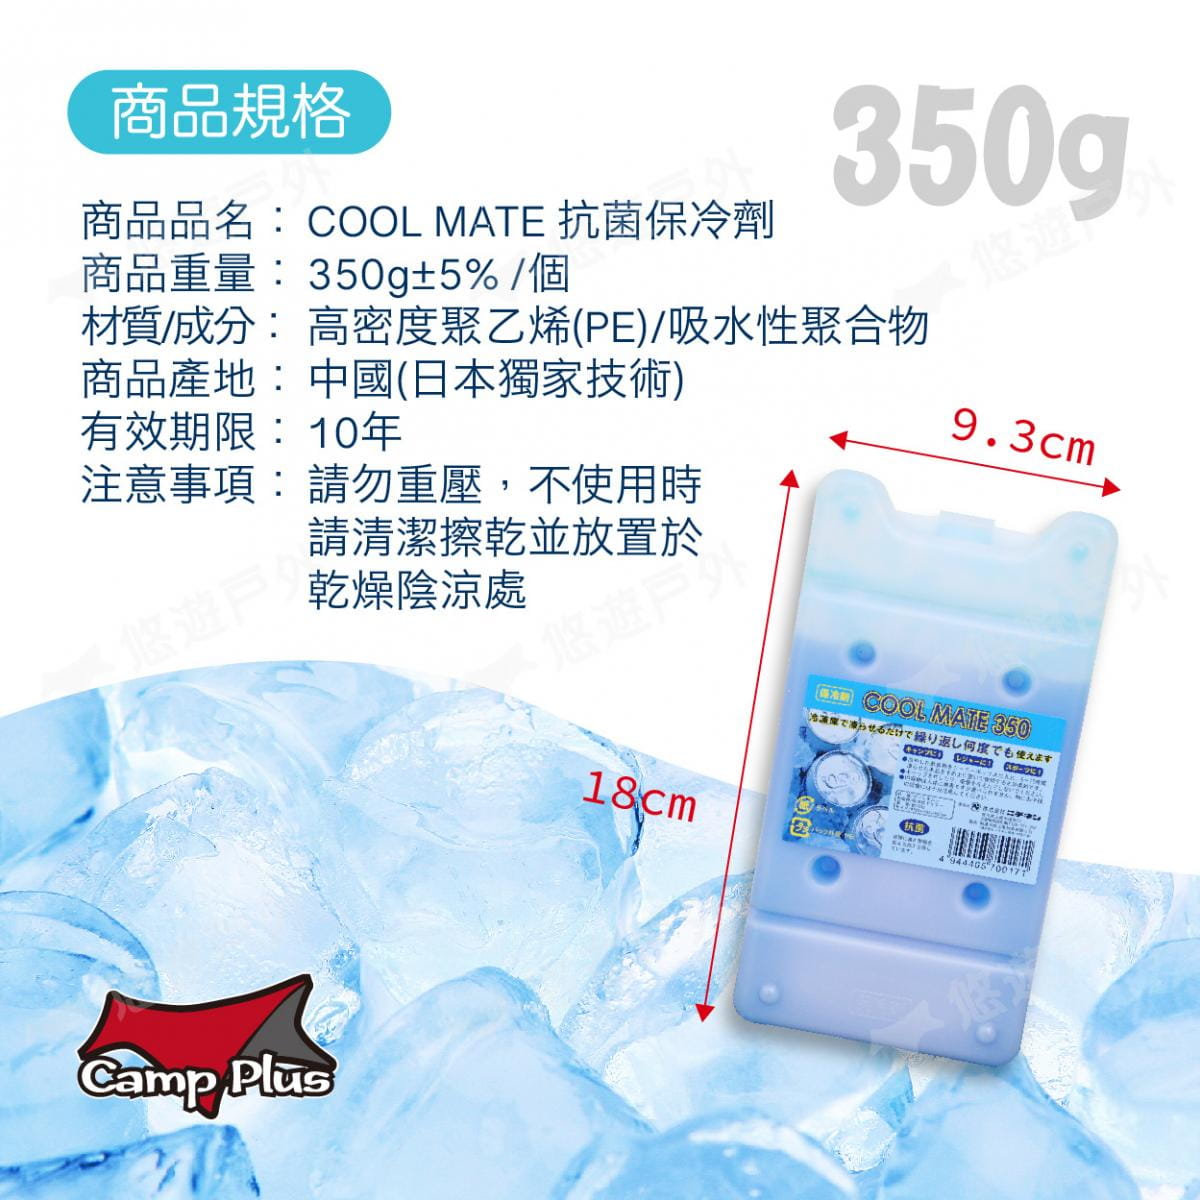 【Camp Plus】COOL MATE 抗菌保冷劑350g (悠遊戶外) 4